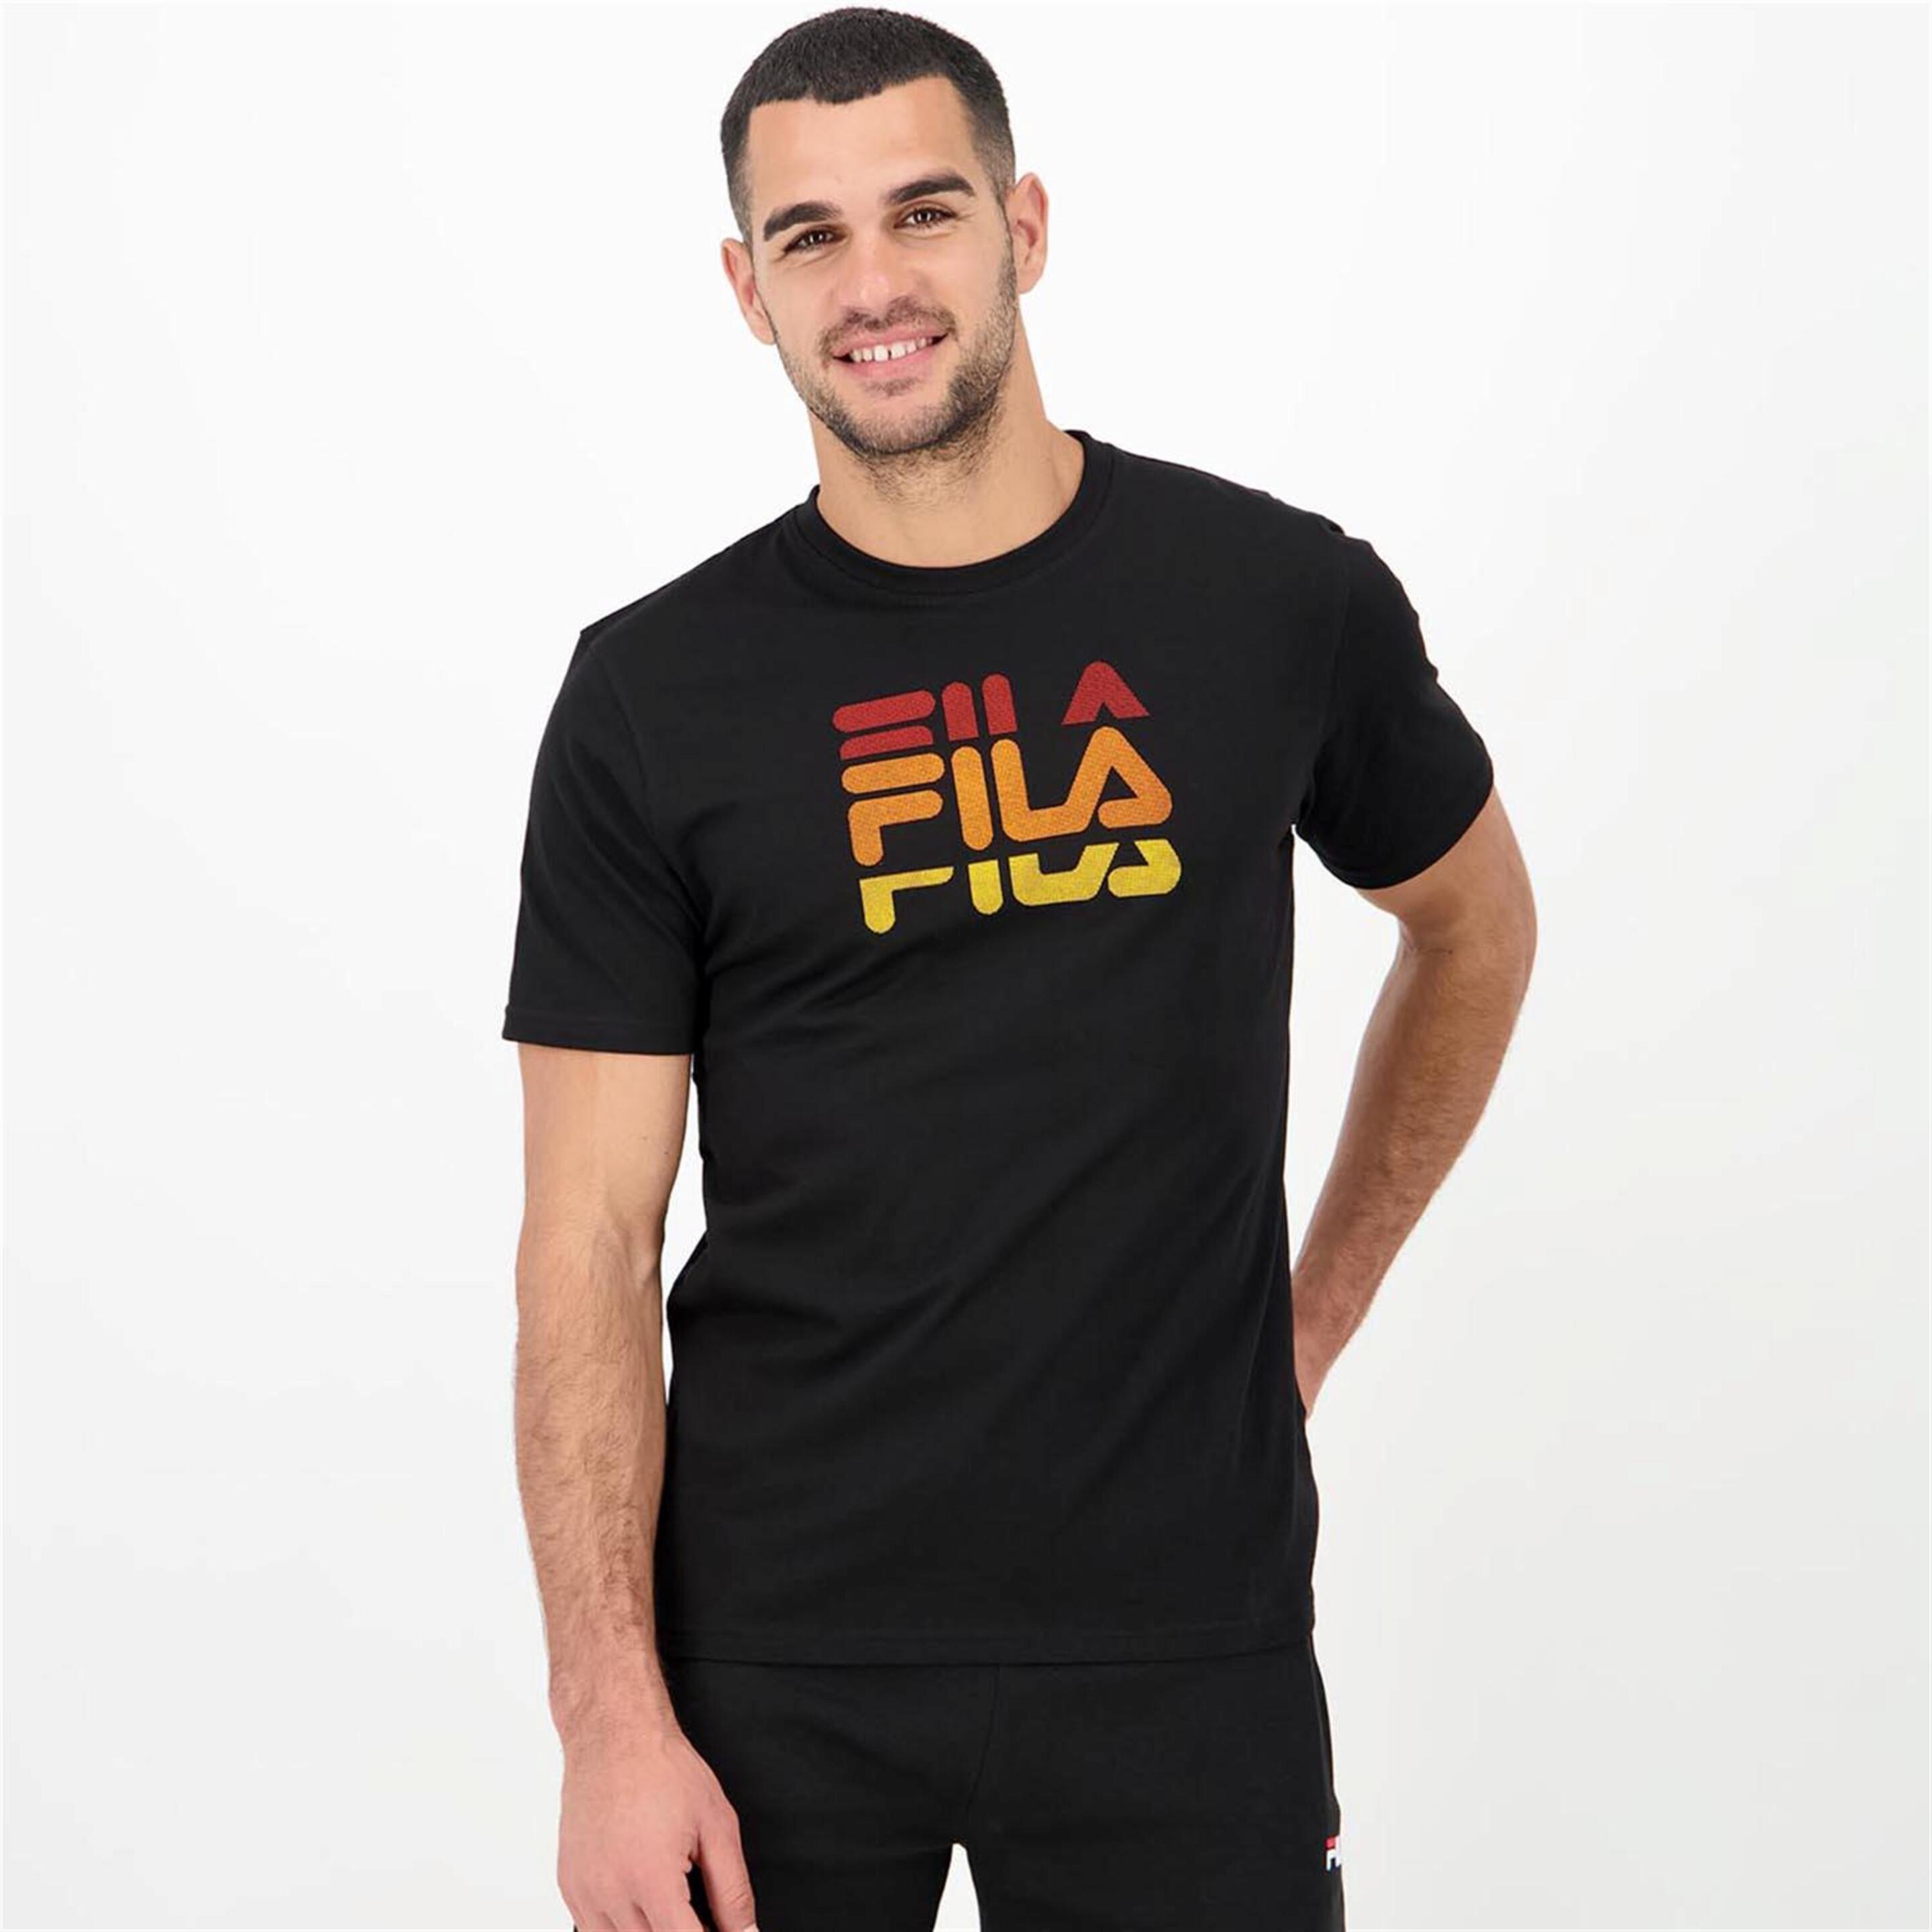 Fila Tez - negro - Camiseta Hombre